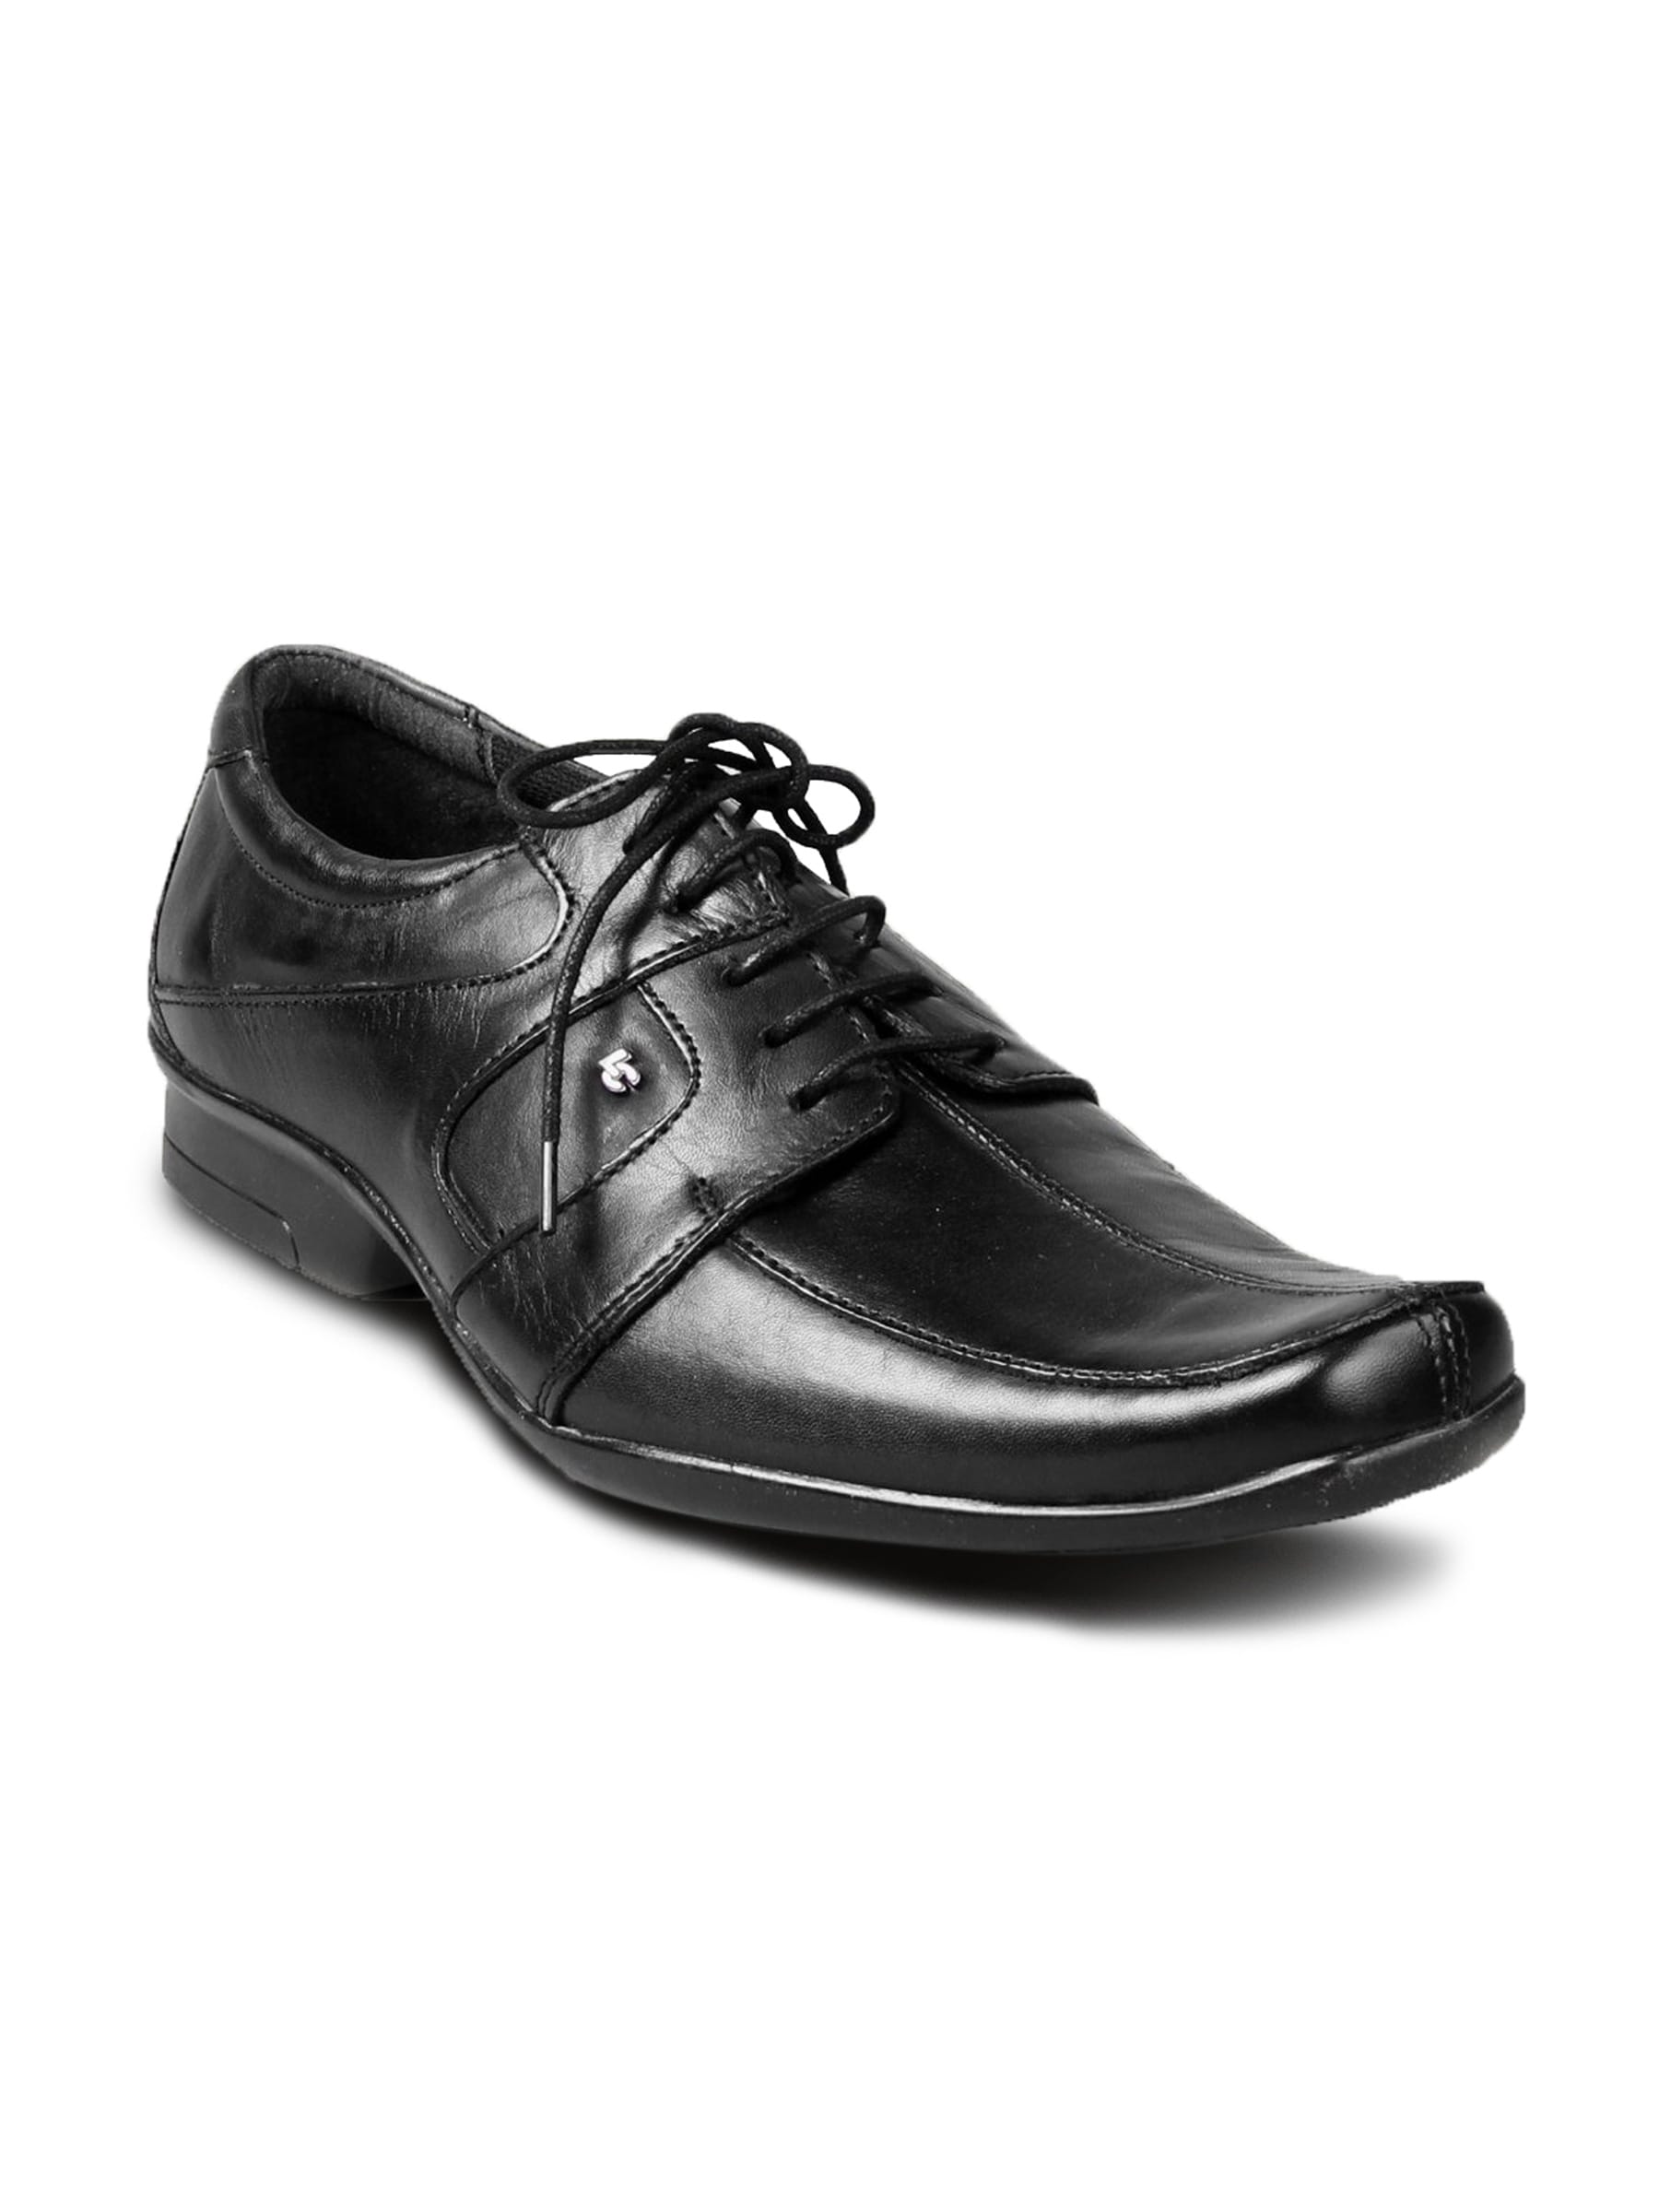 Lee Cooper Men's Casual Leather Darknight Black Shoe